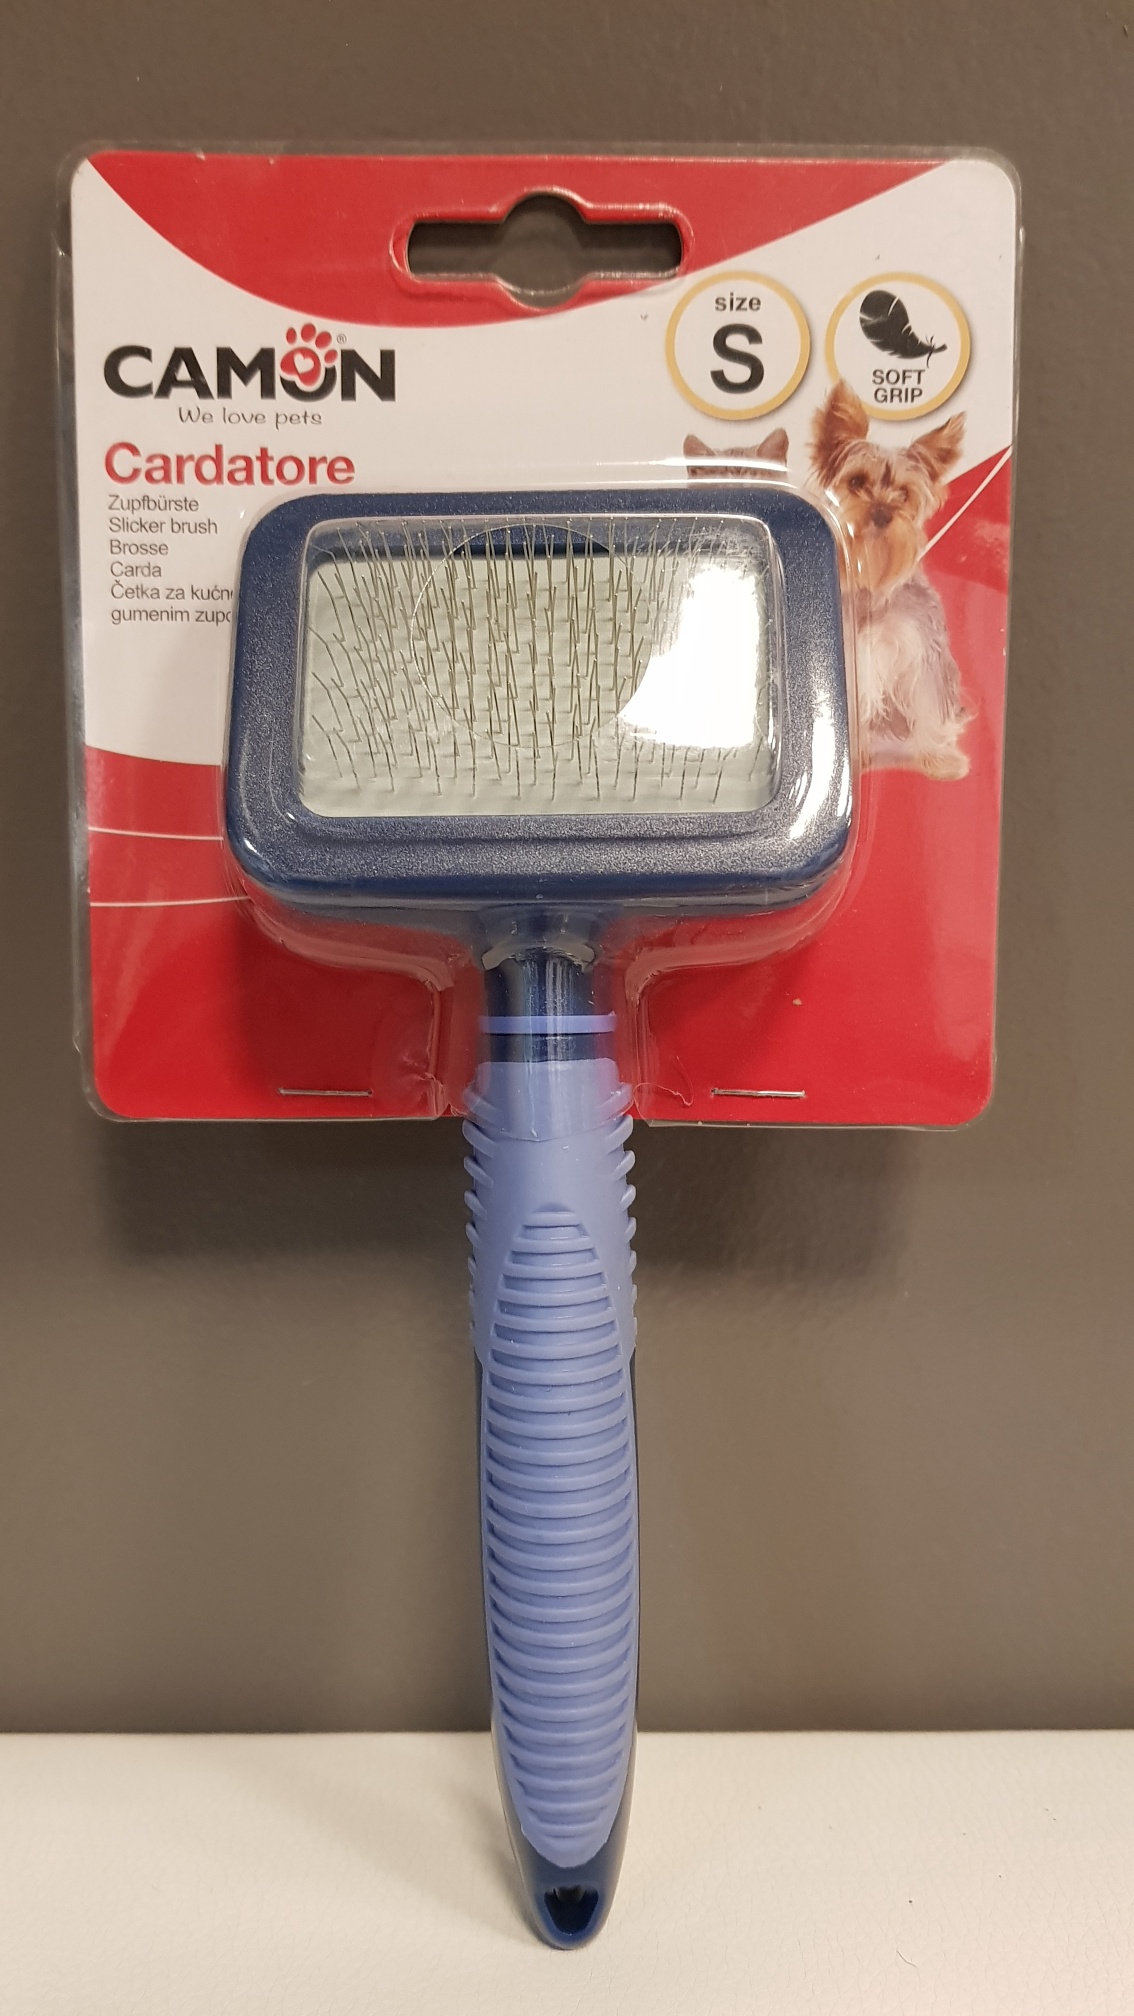 cardatore Camon soft grip_02